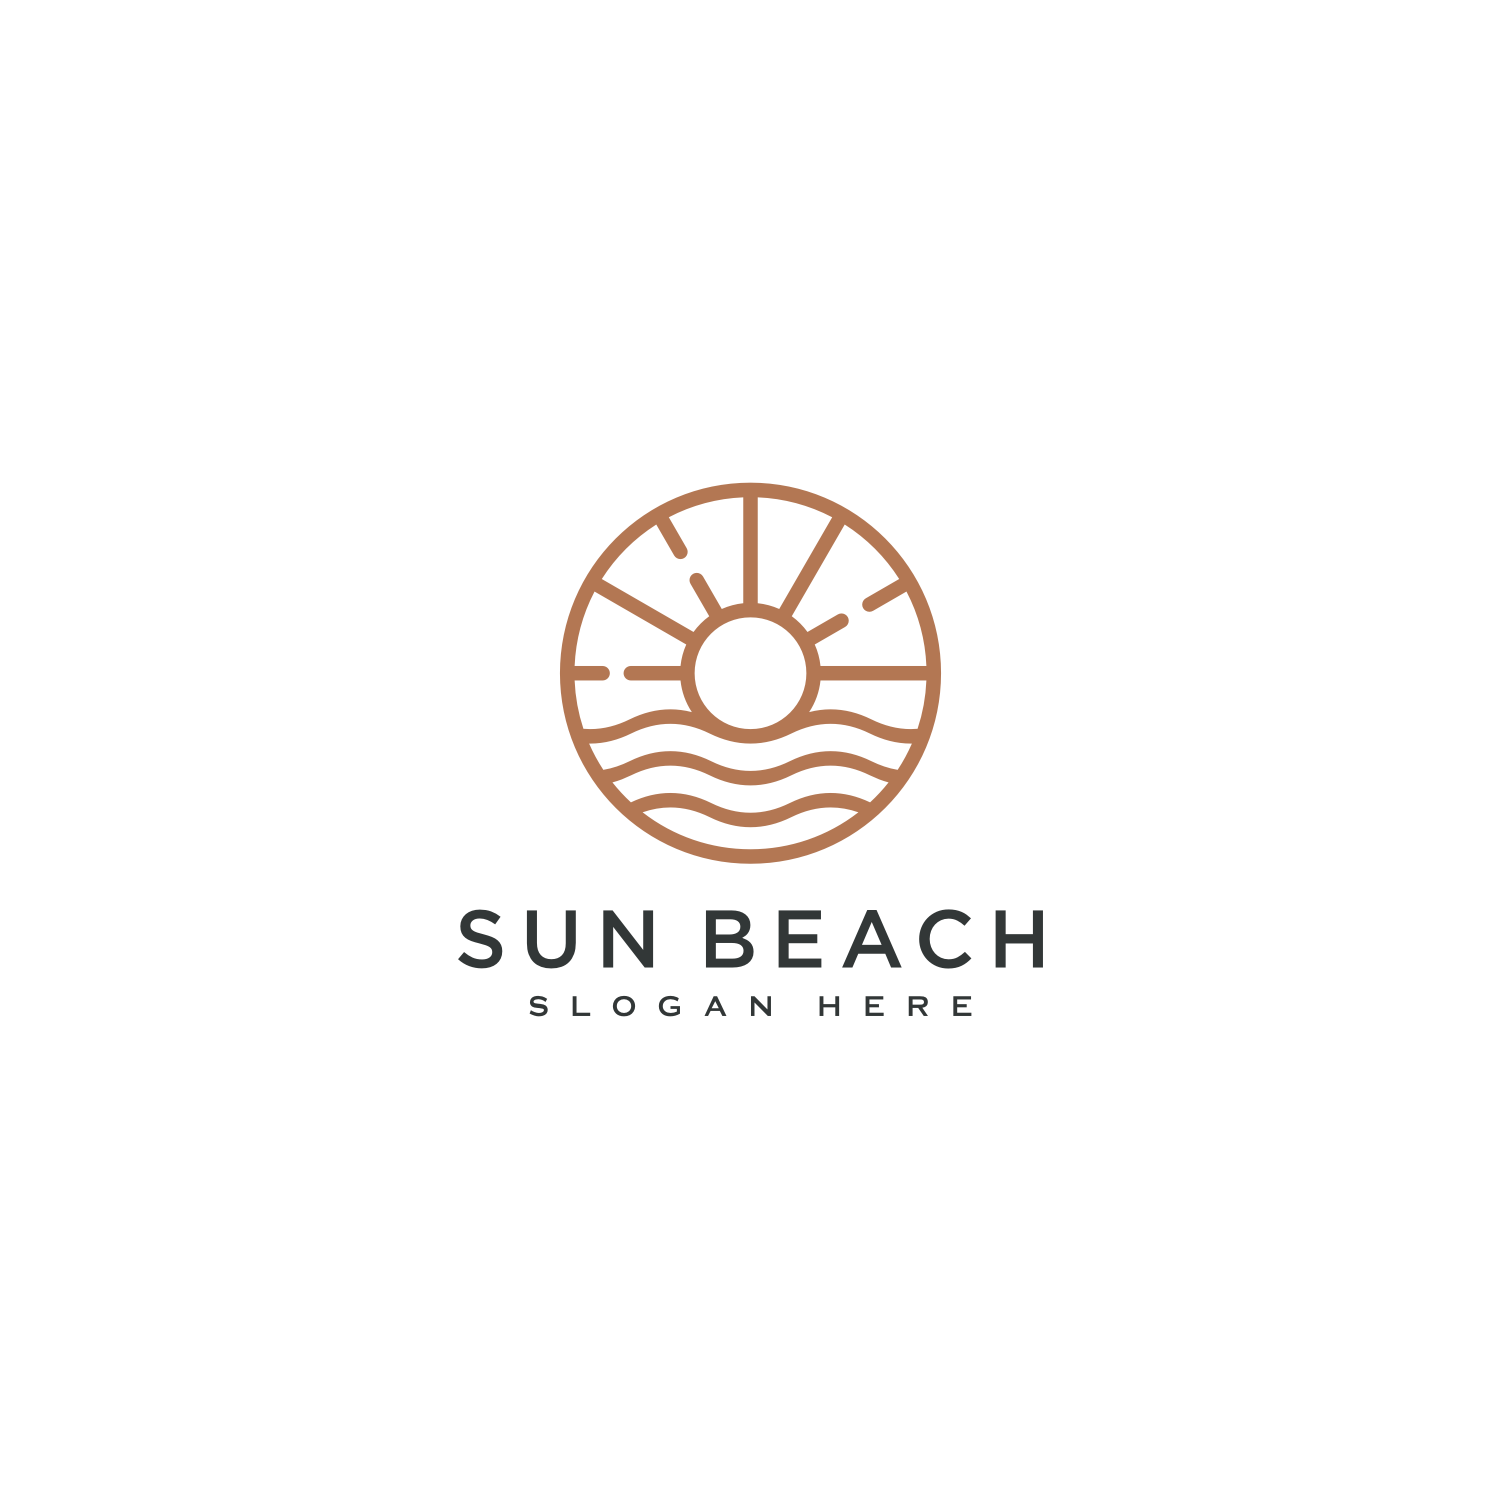 Sun Beach Logo Design Premium Vector Cover Image.